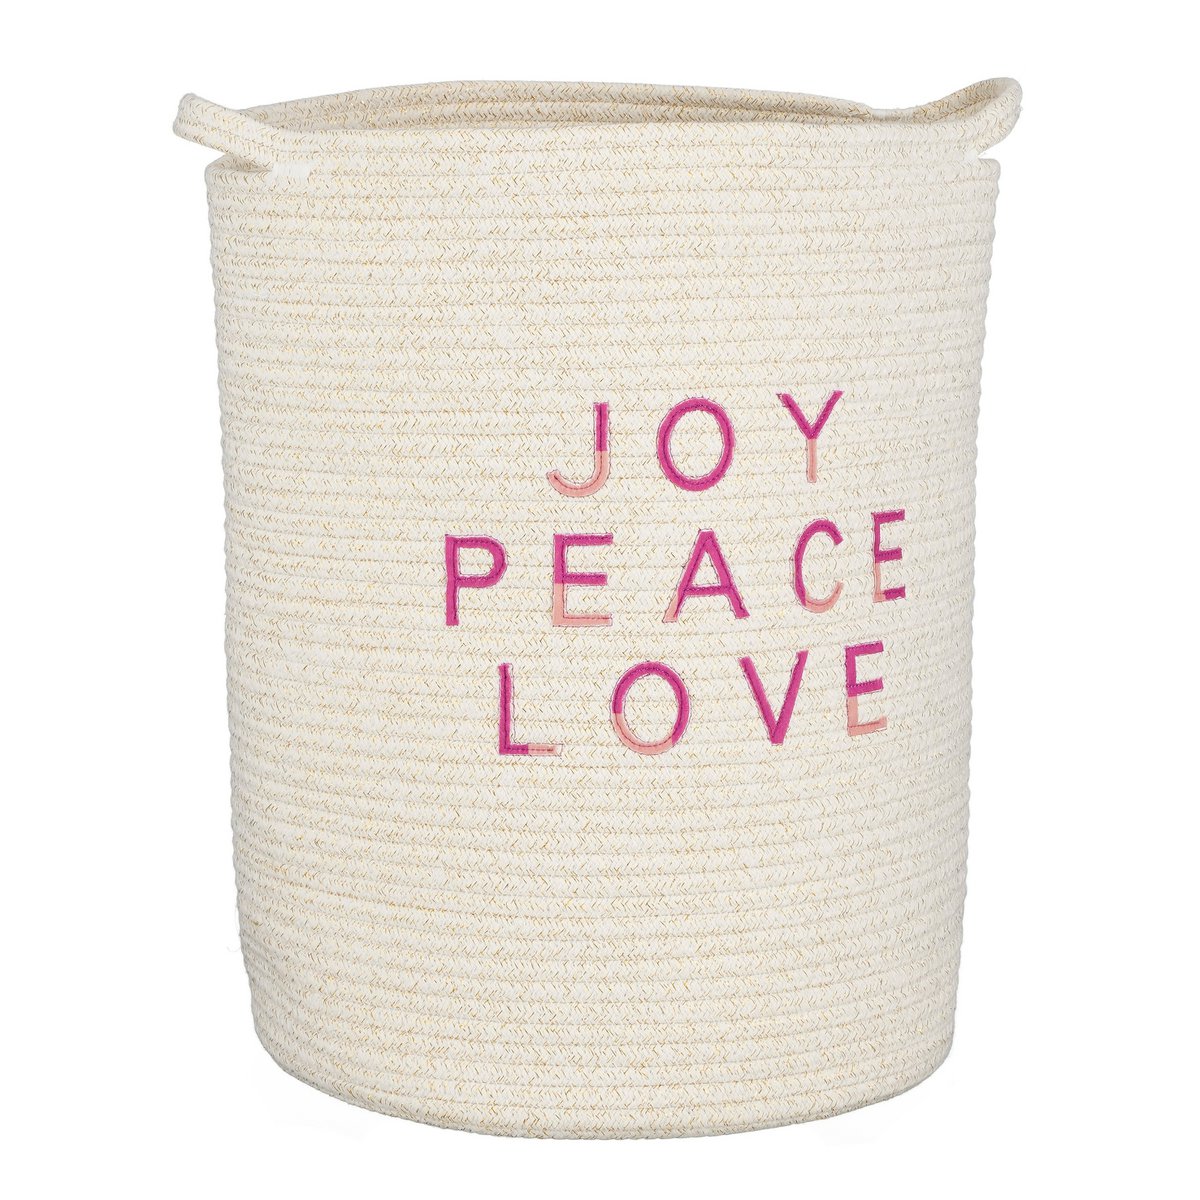 Aufbewahrungskorb Joy, Peace, Love  – 2er-Set